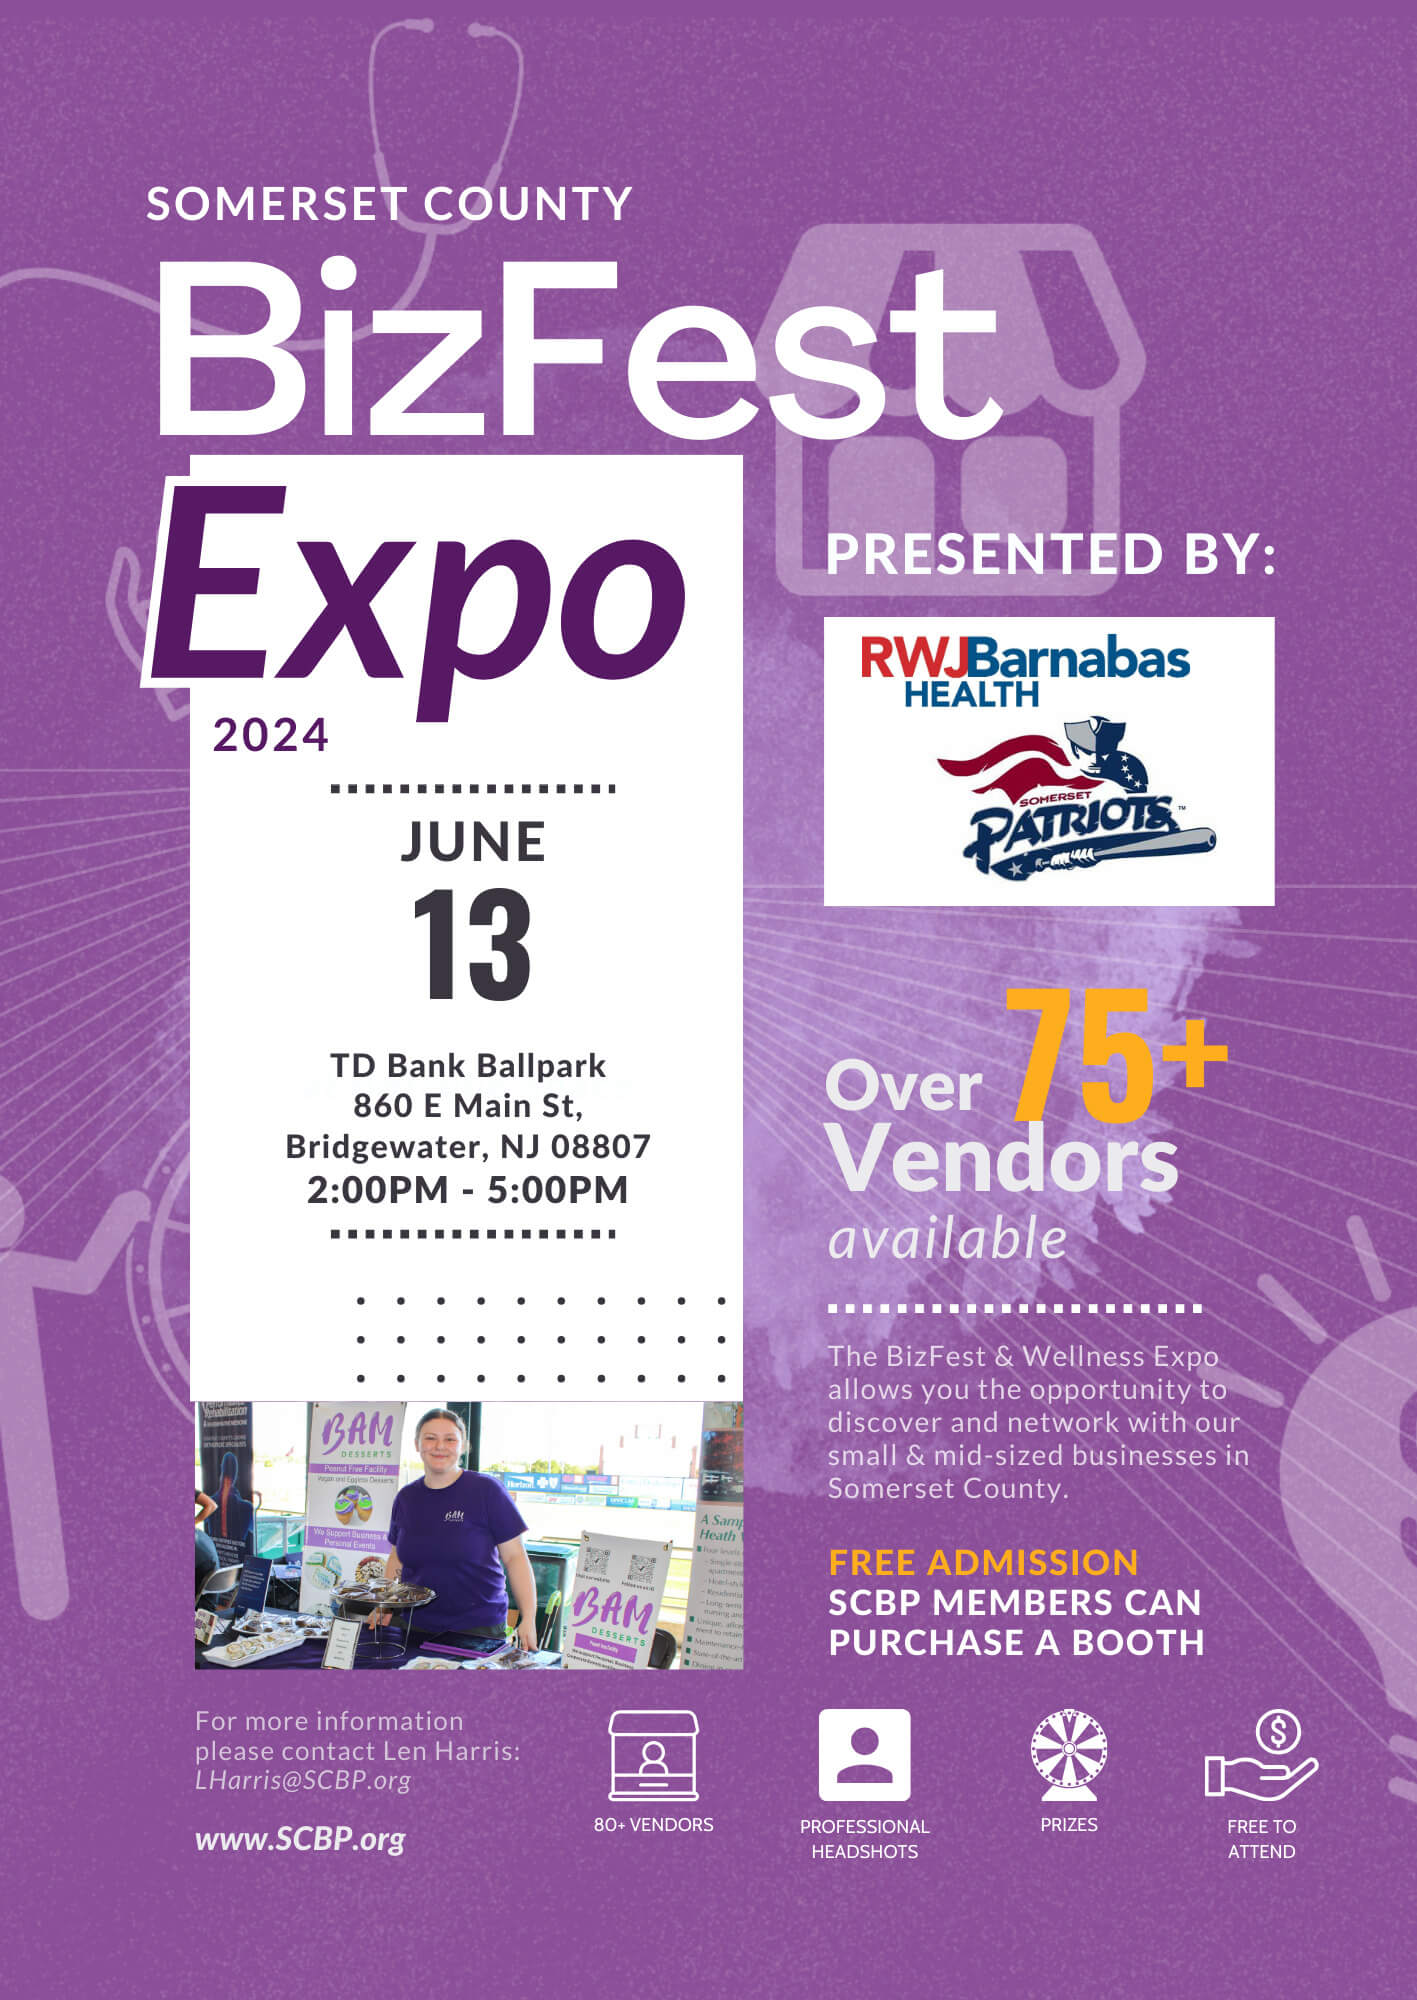 BizFest Expo - Somerset County Business Partnership